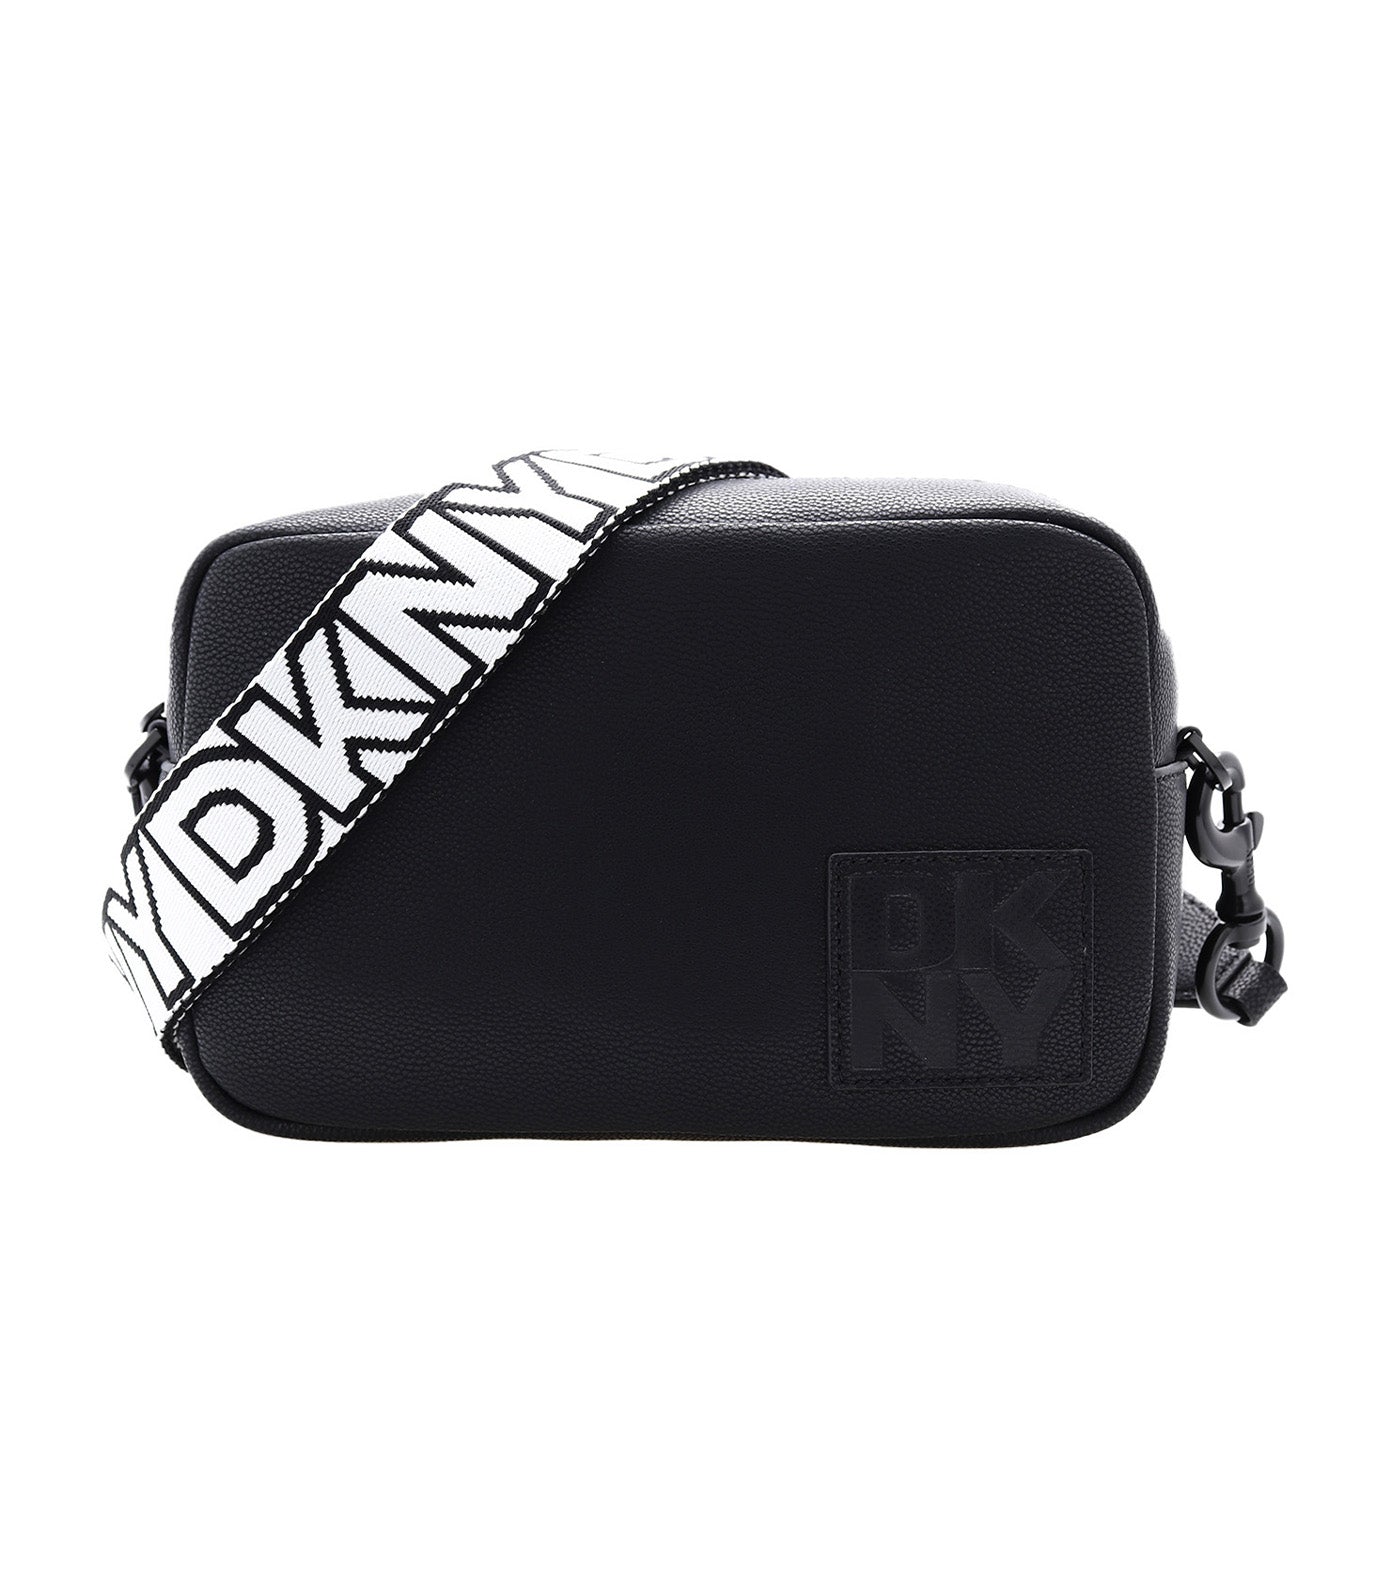 Kenza Camera Bag Black/Black